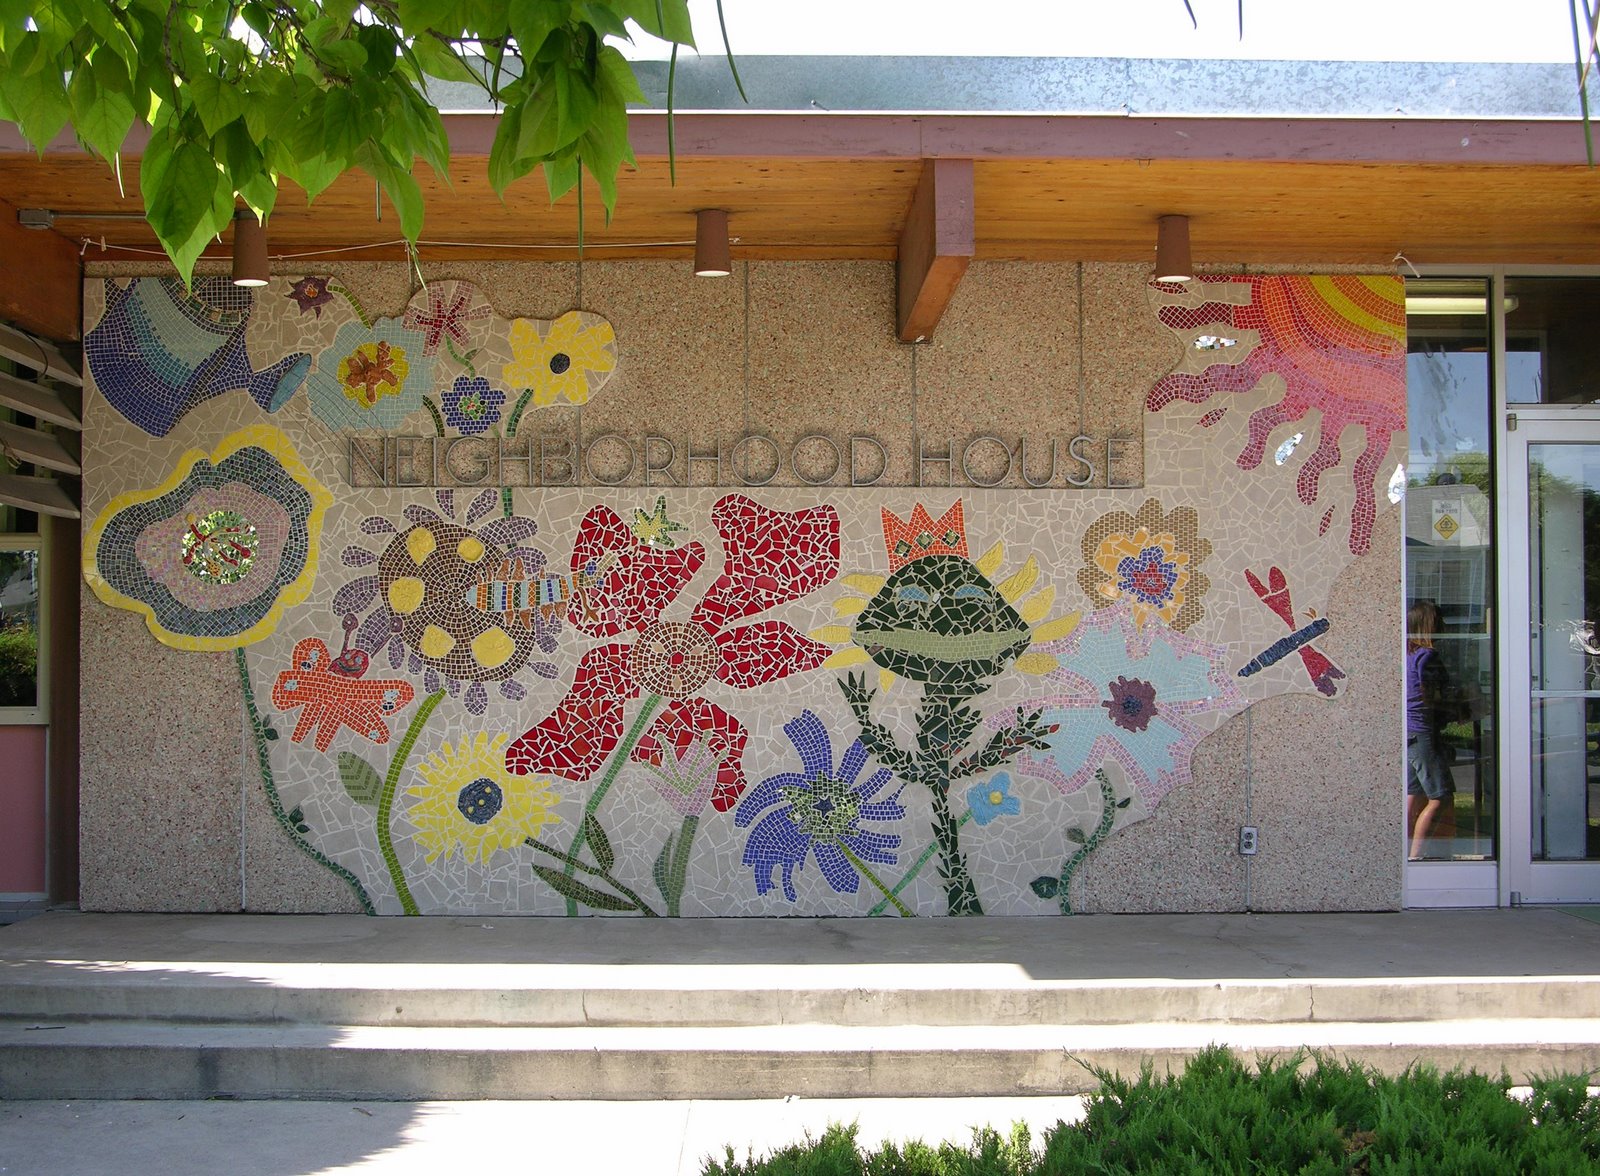 Neighborhood House, Sarah Moyer, 2008